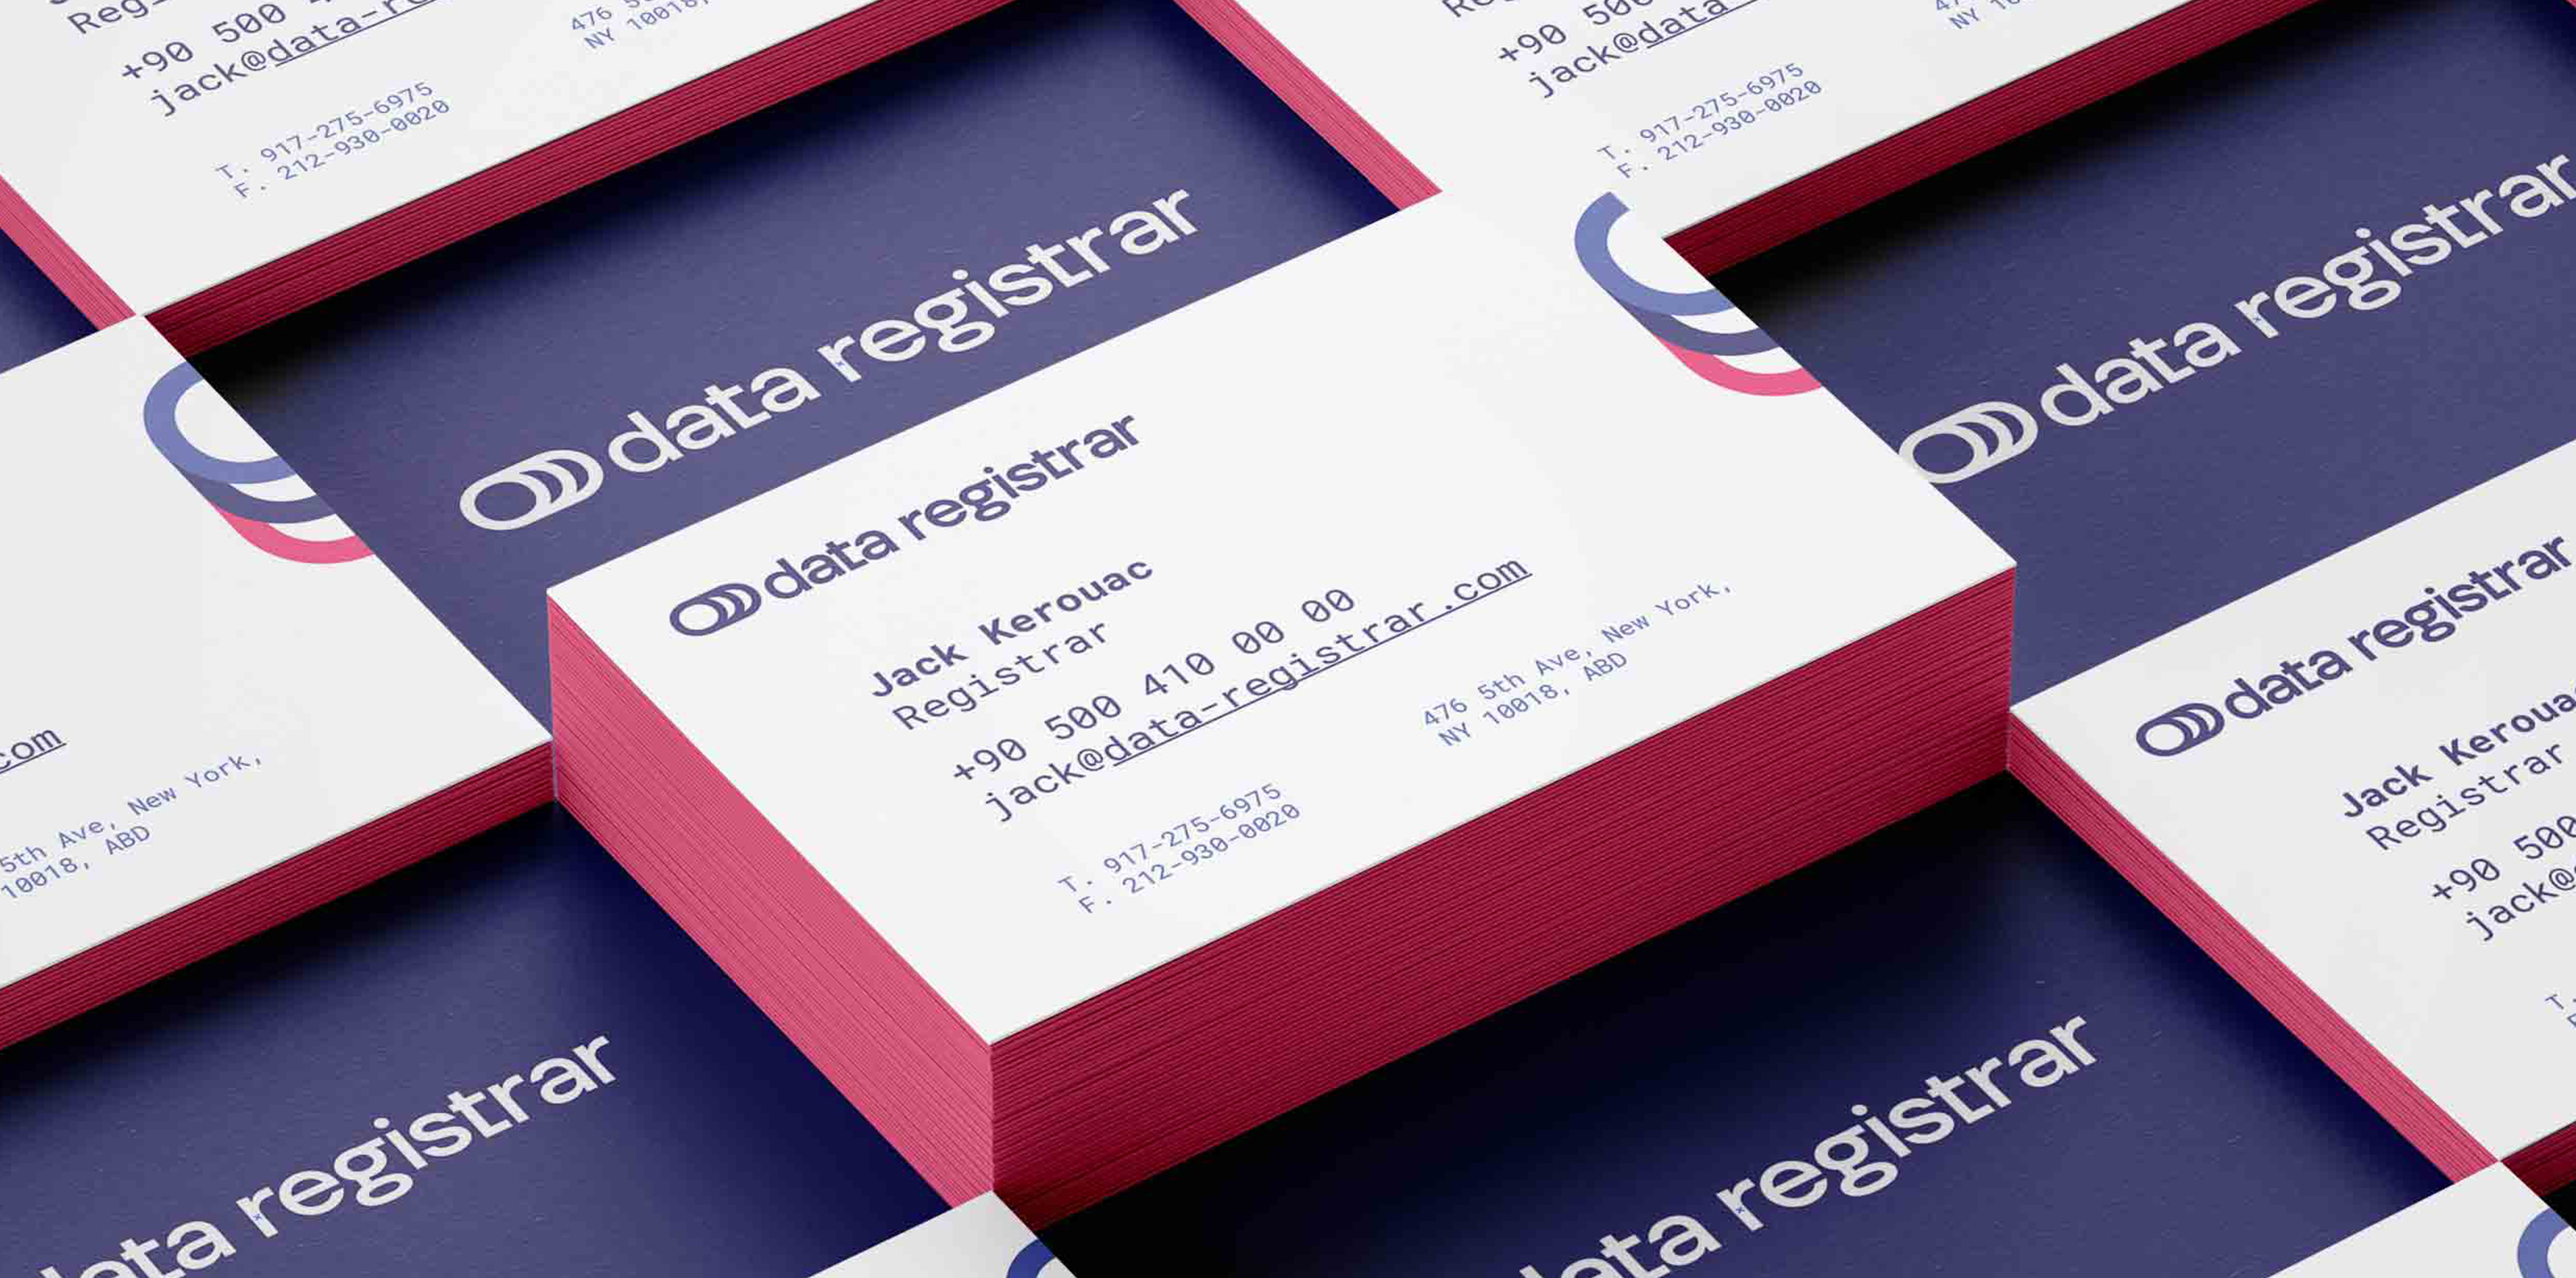 Data-Registrar Logo, Brand ID, Corporate Identity, Brochure 6